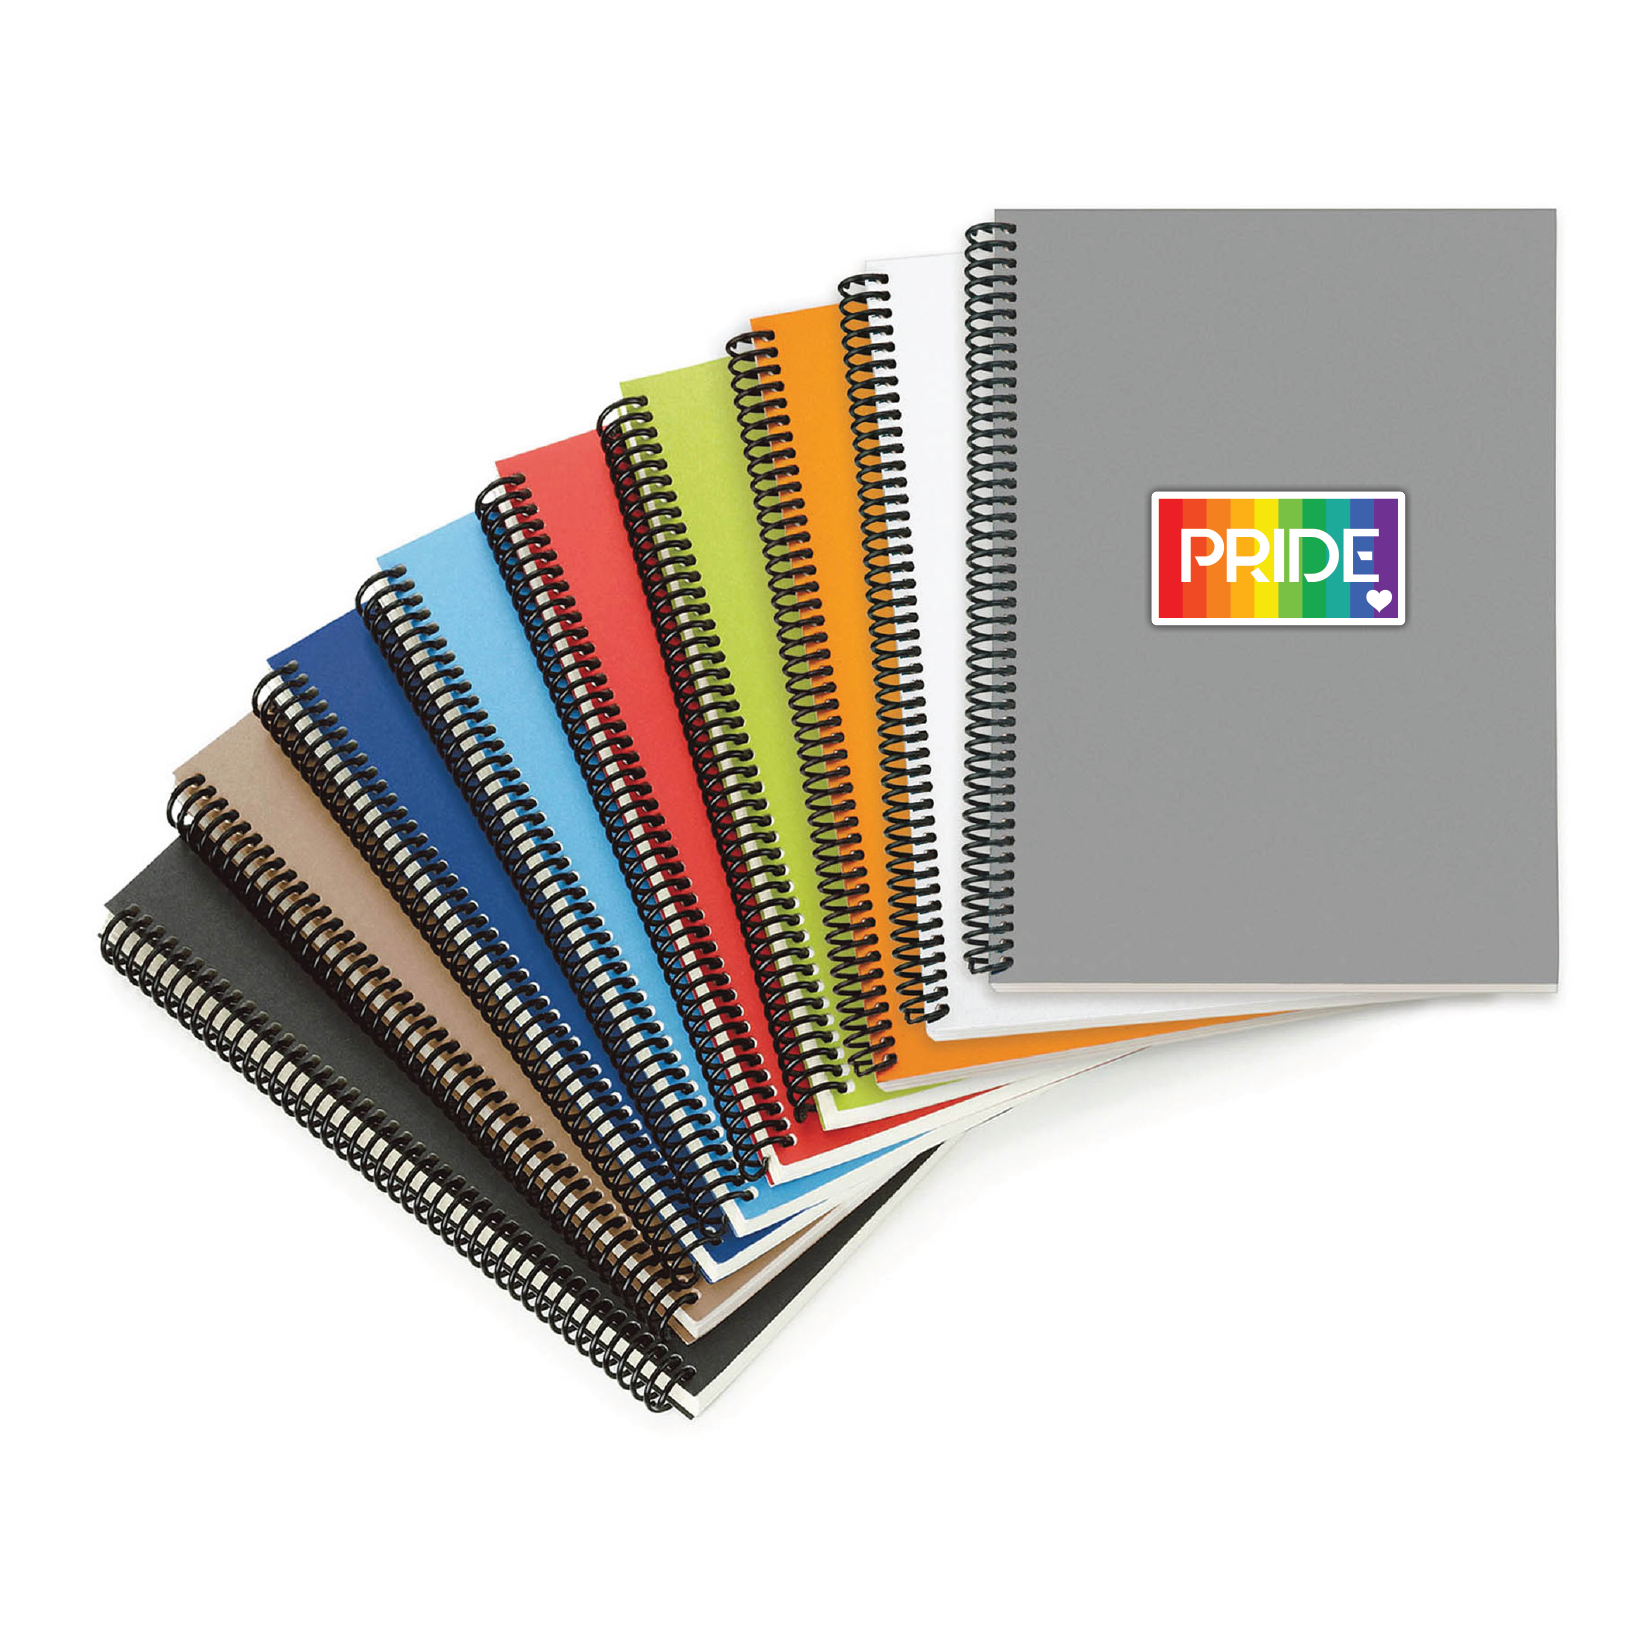 PRIDE coil-bound notebooks